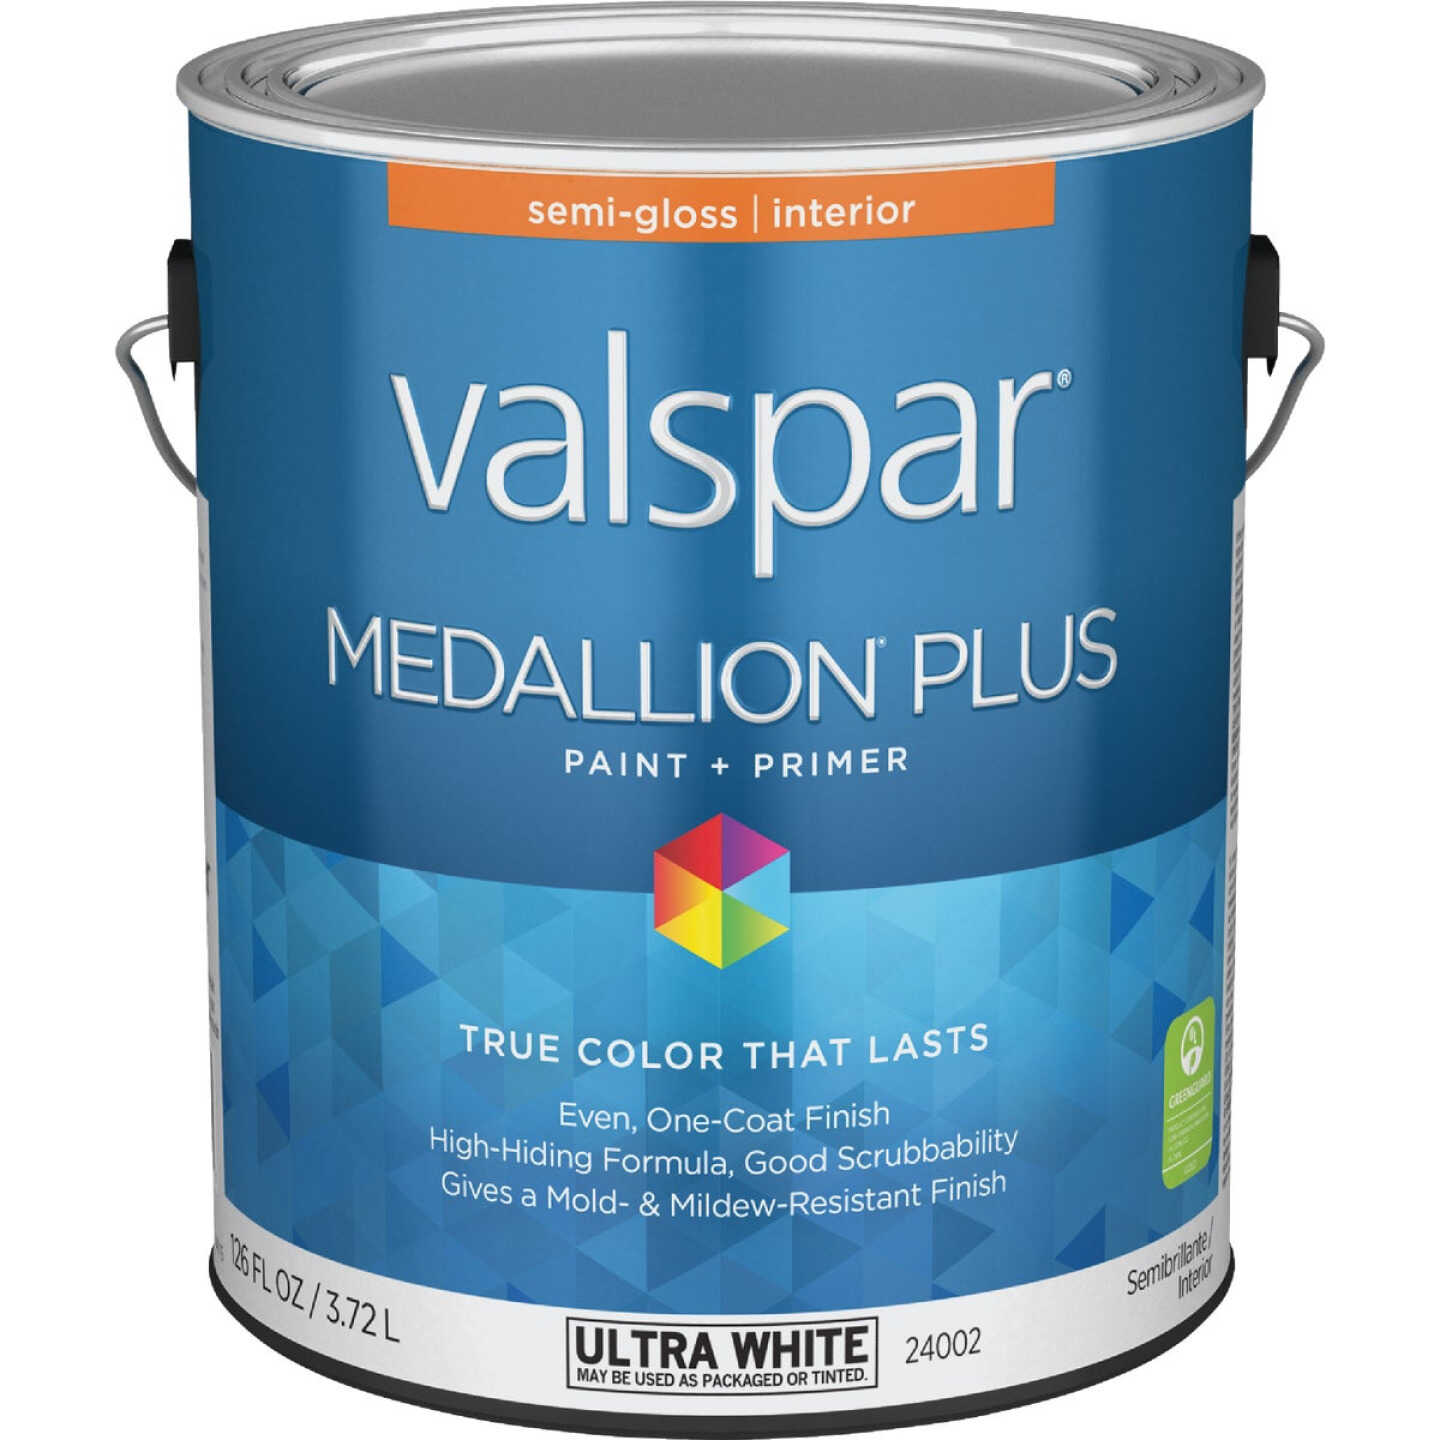 Valspar Medallion Plus Premium Paint & Primer Semi-Gloss Interior Paint,  Ultra White, 1 Gal. - Power Townsend Company